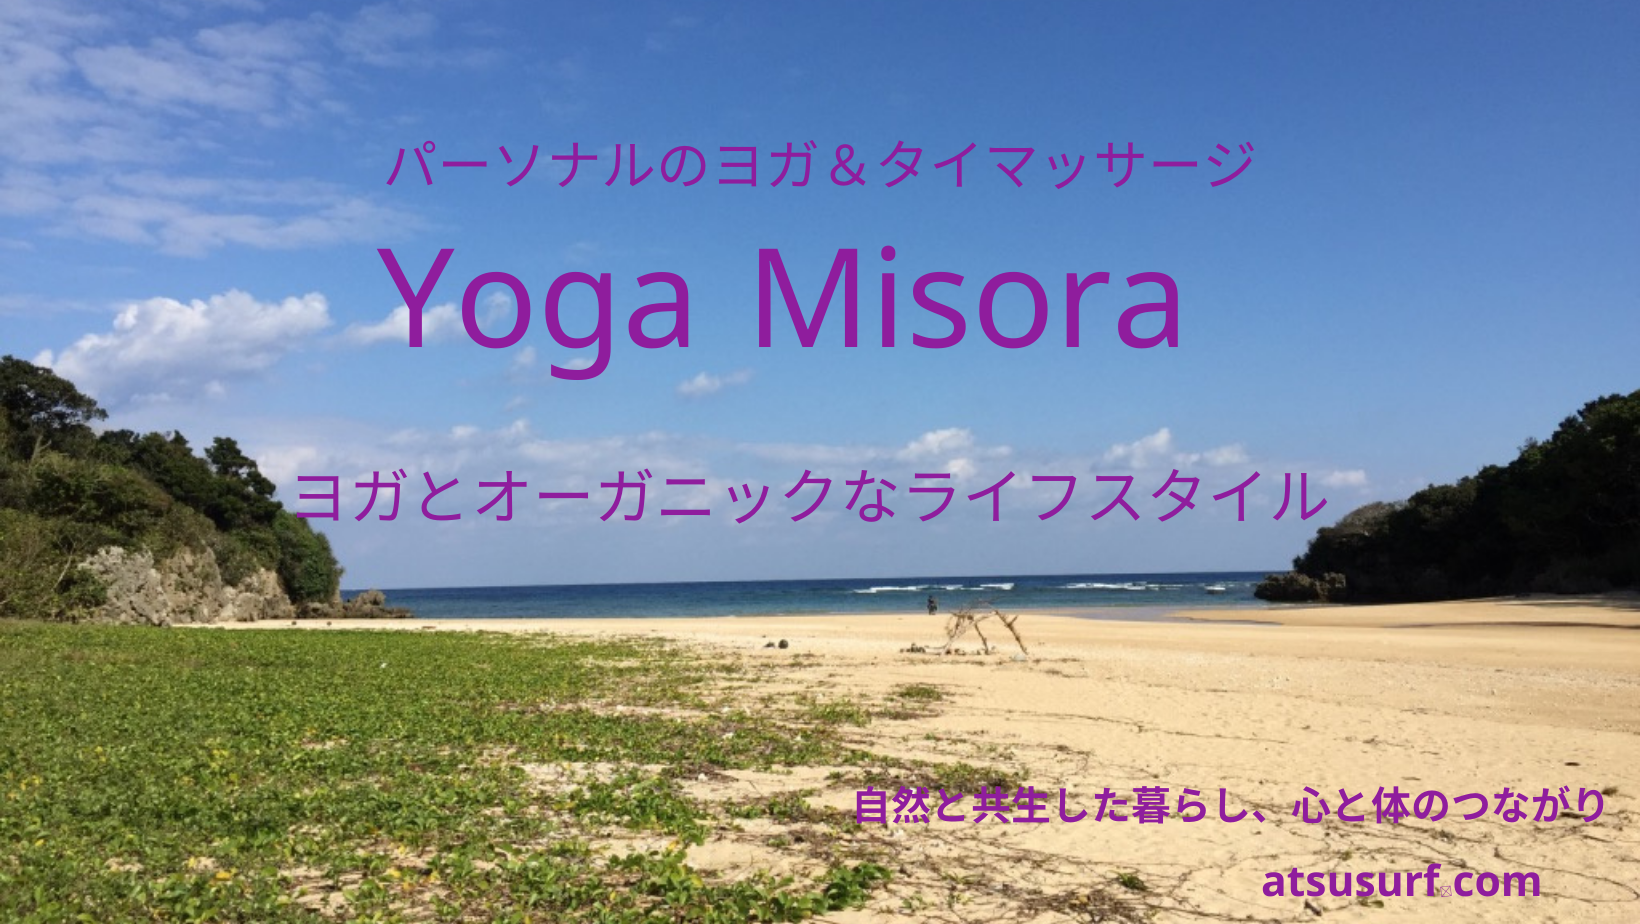 Yoga Misora atsusurf